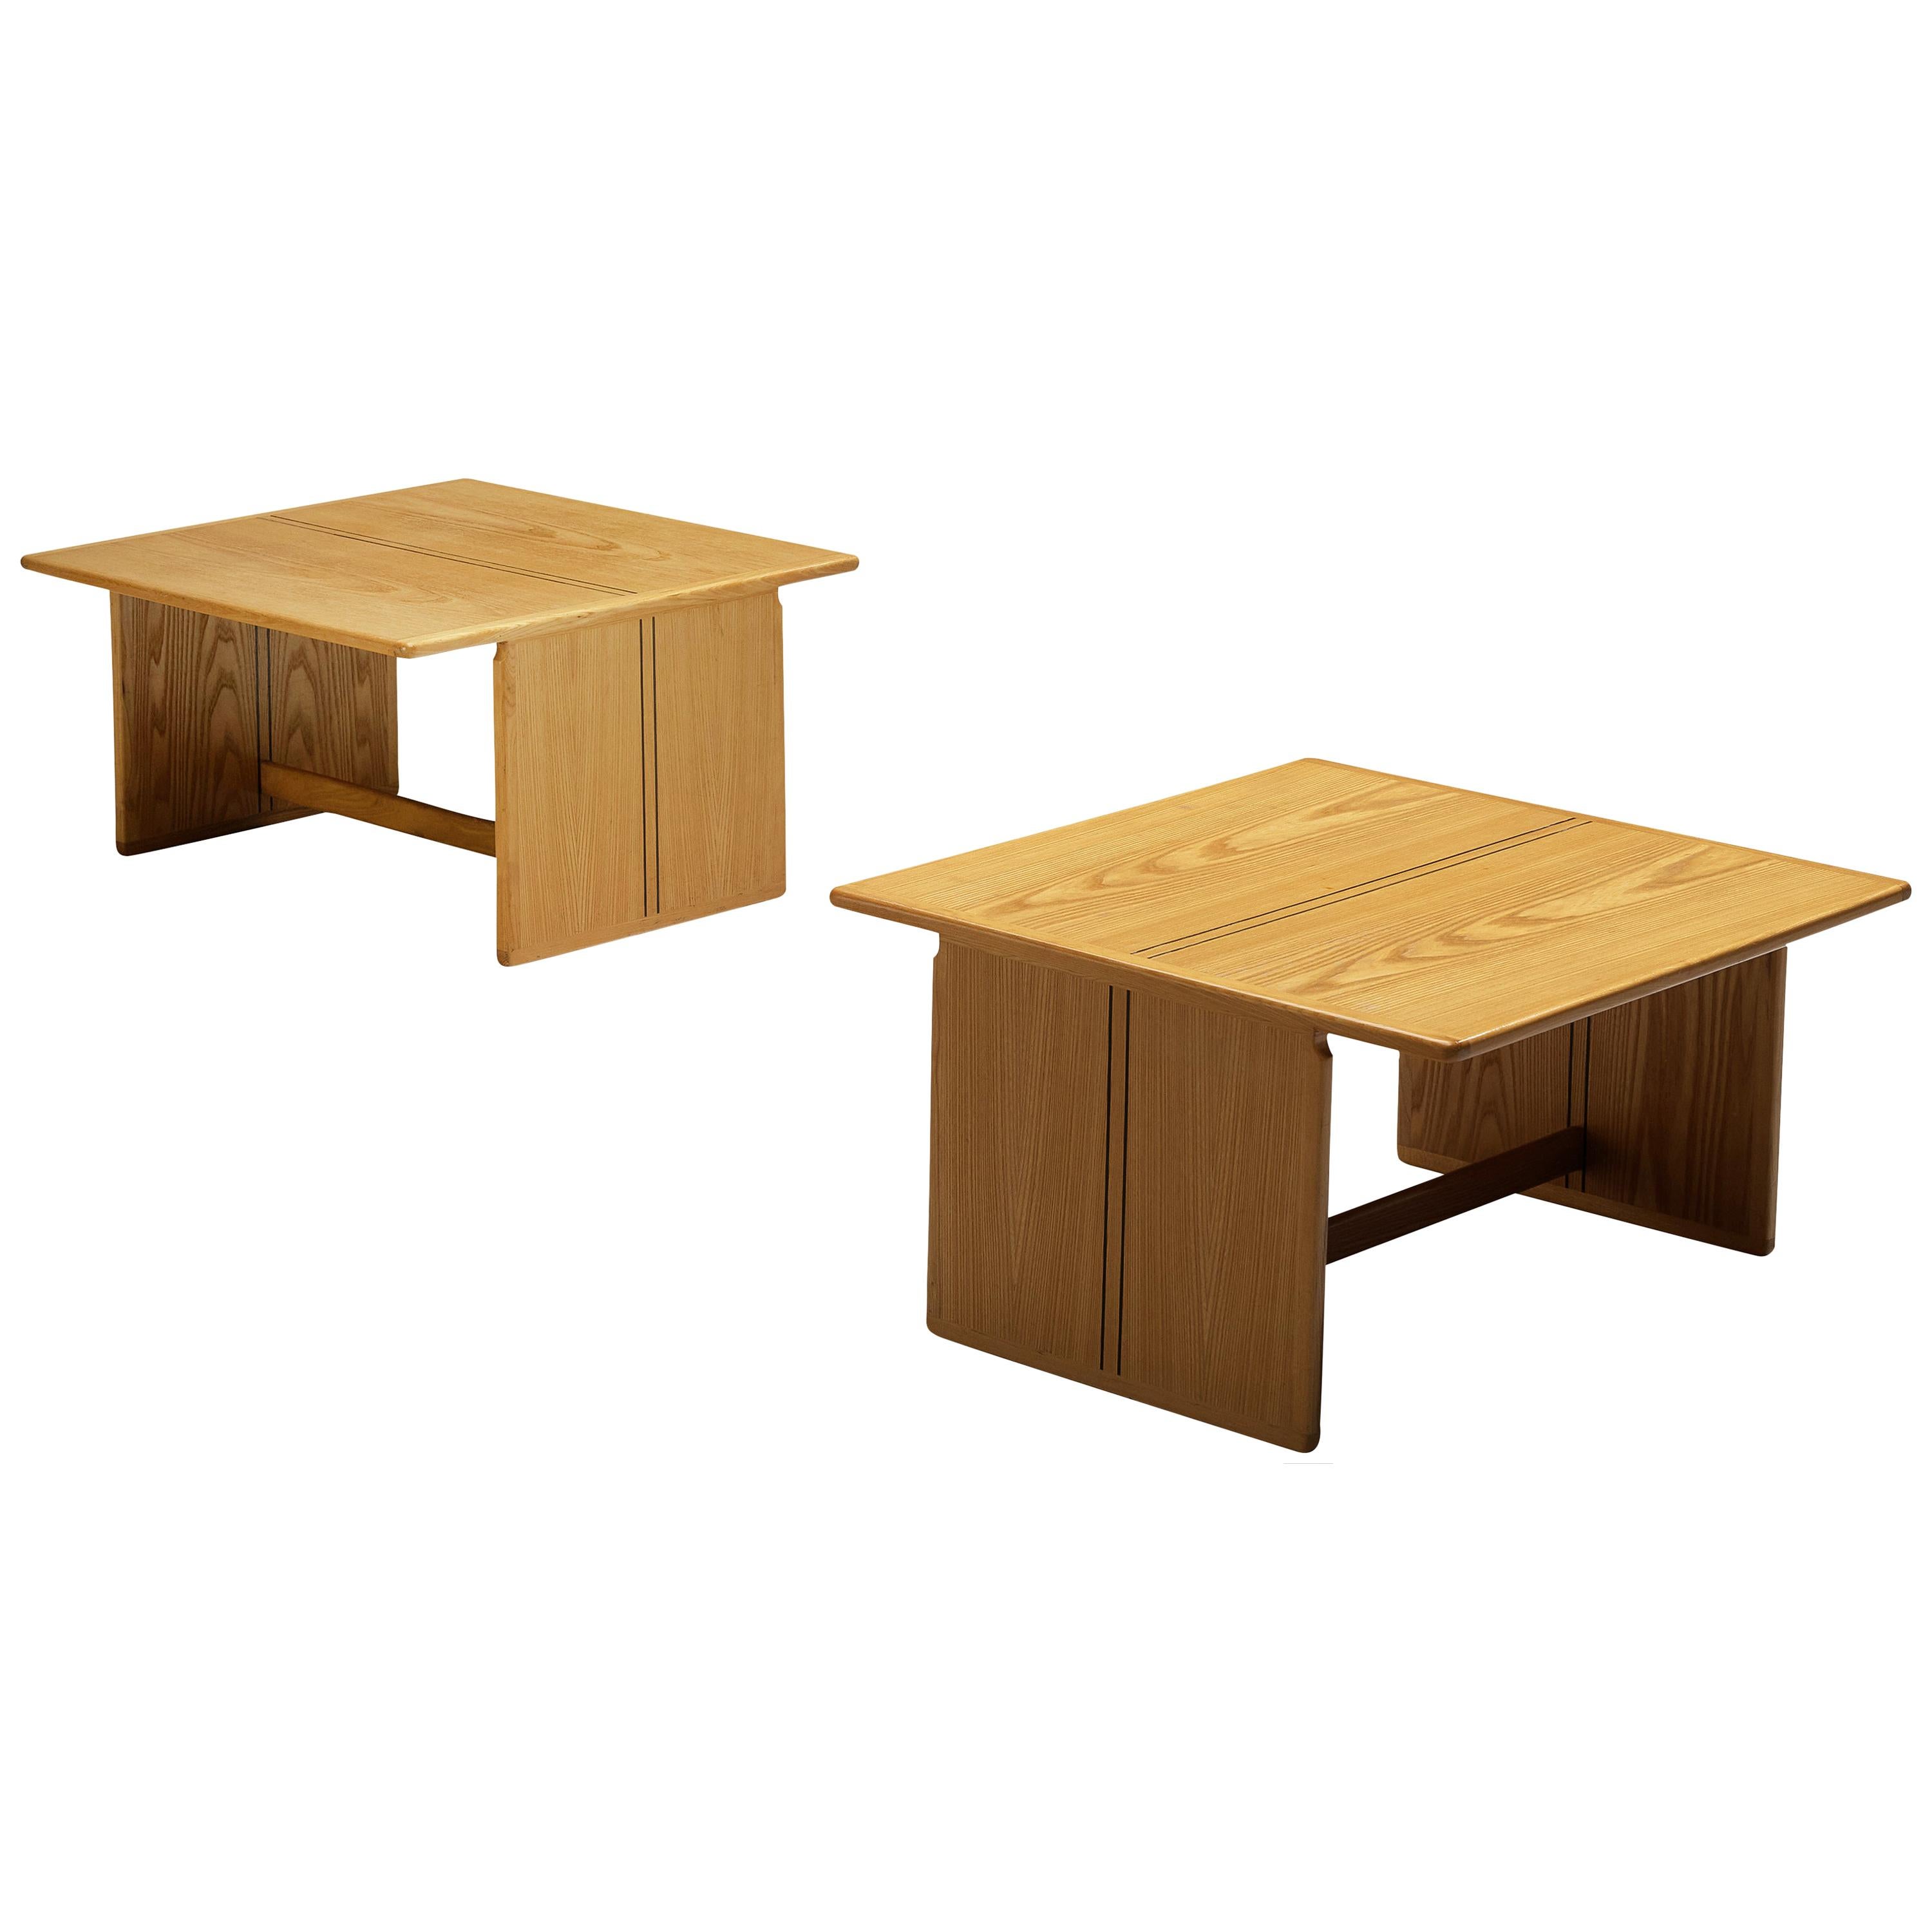 Afra & Tobia Scarpa for Maxalto 'Artona' Pair of Side Tables in Ash